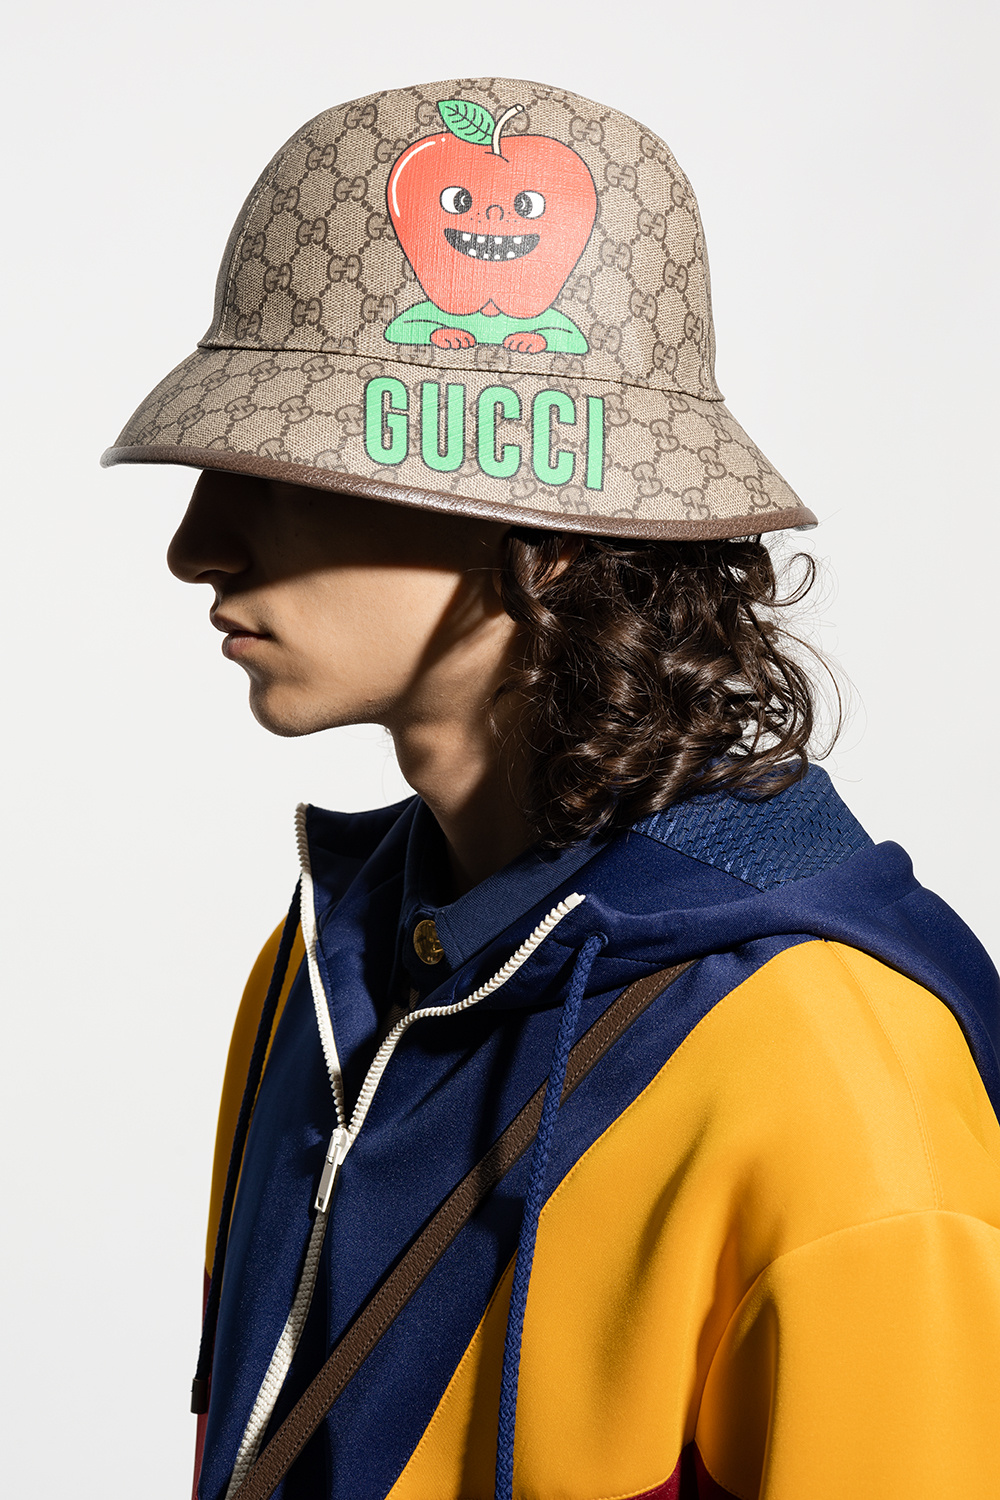 Gucci Gucci Kids Girls Hoodies & Sweatshirts